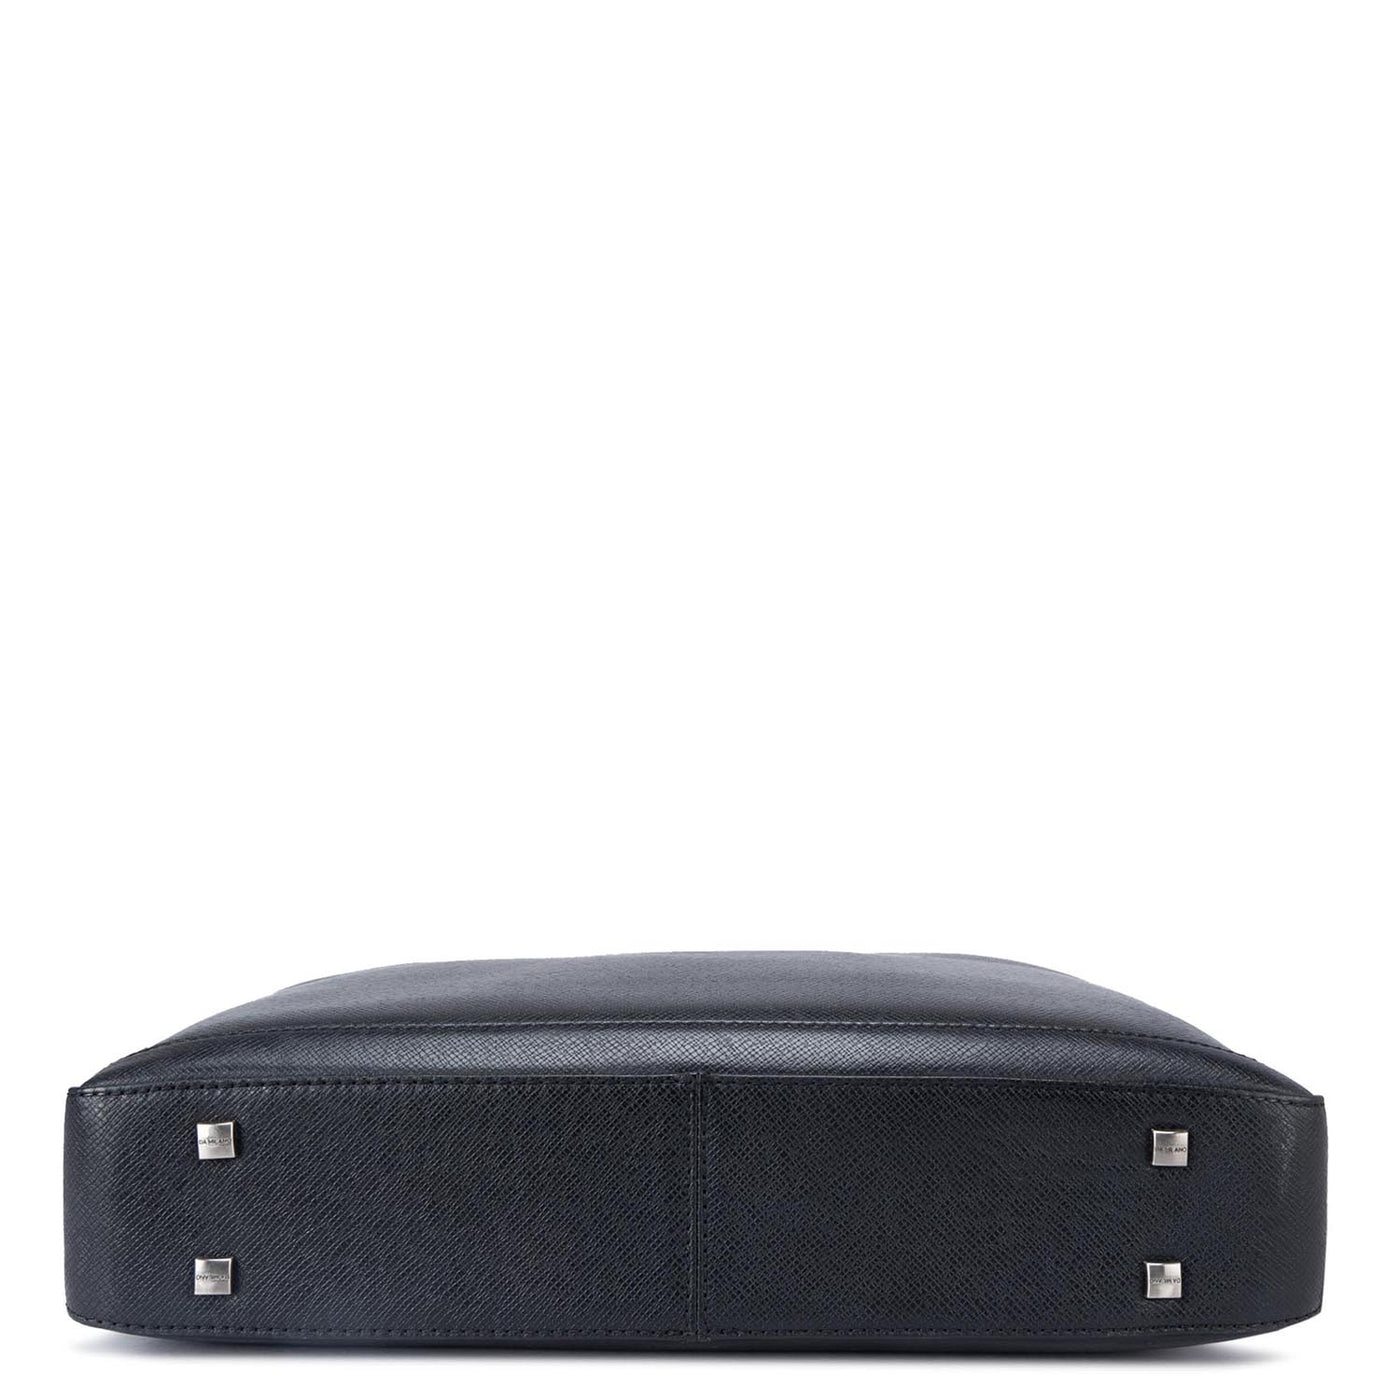 Black Franzy Leather Computer Bag - Upto 14"